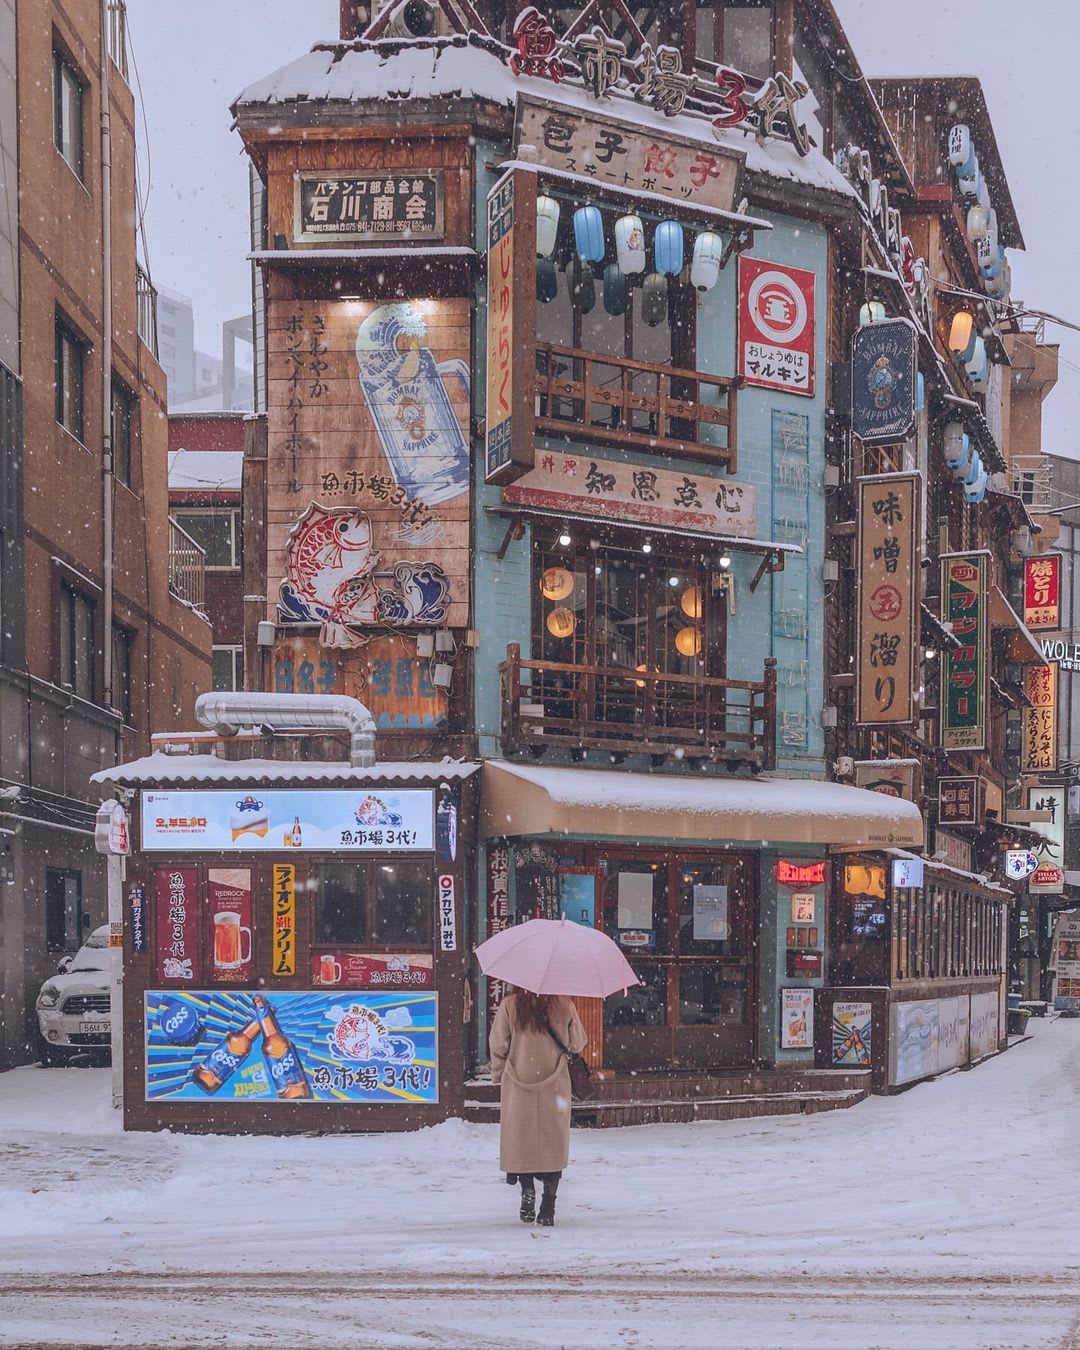 Japanese restaurant and bar in the snow, Seoul, South Korea.